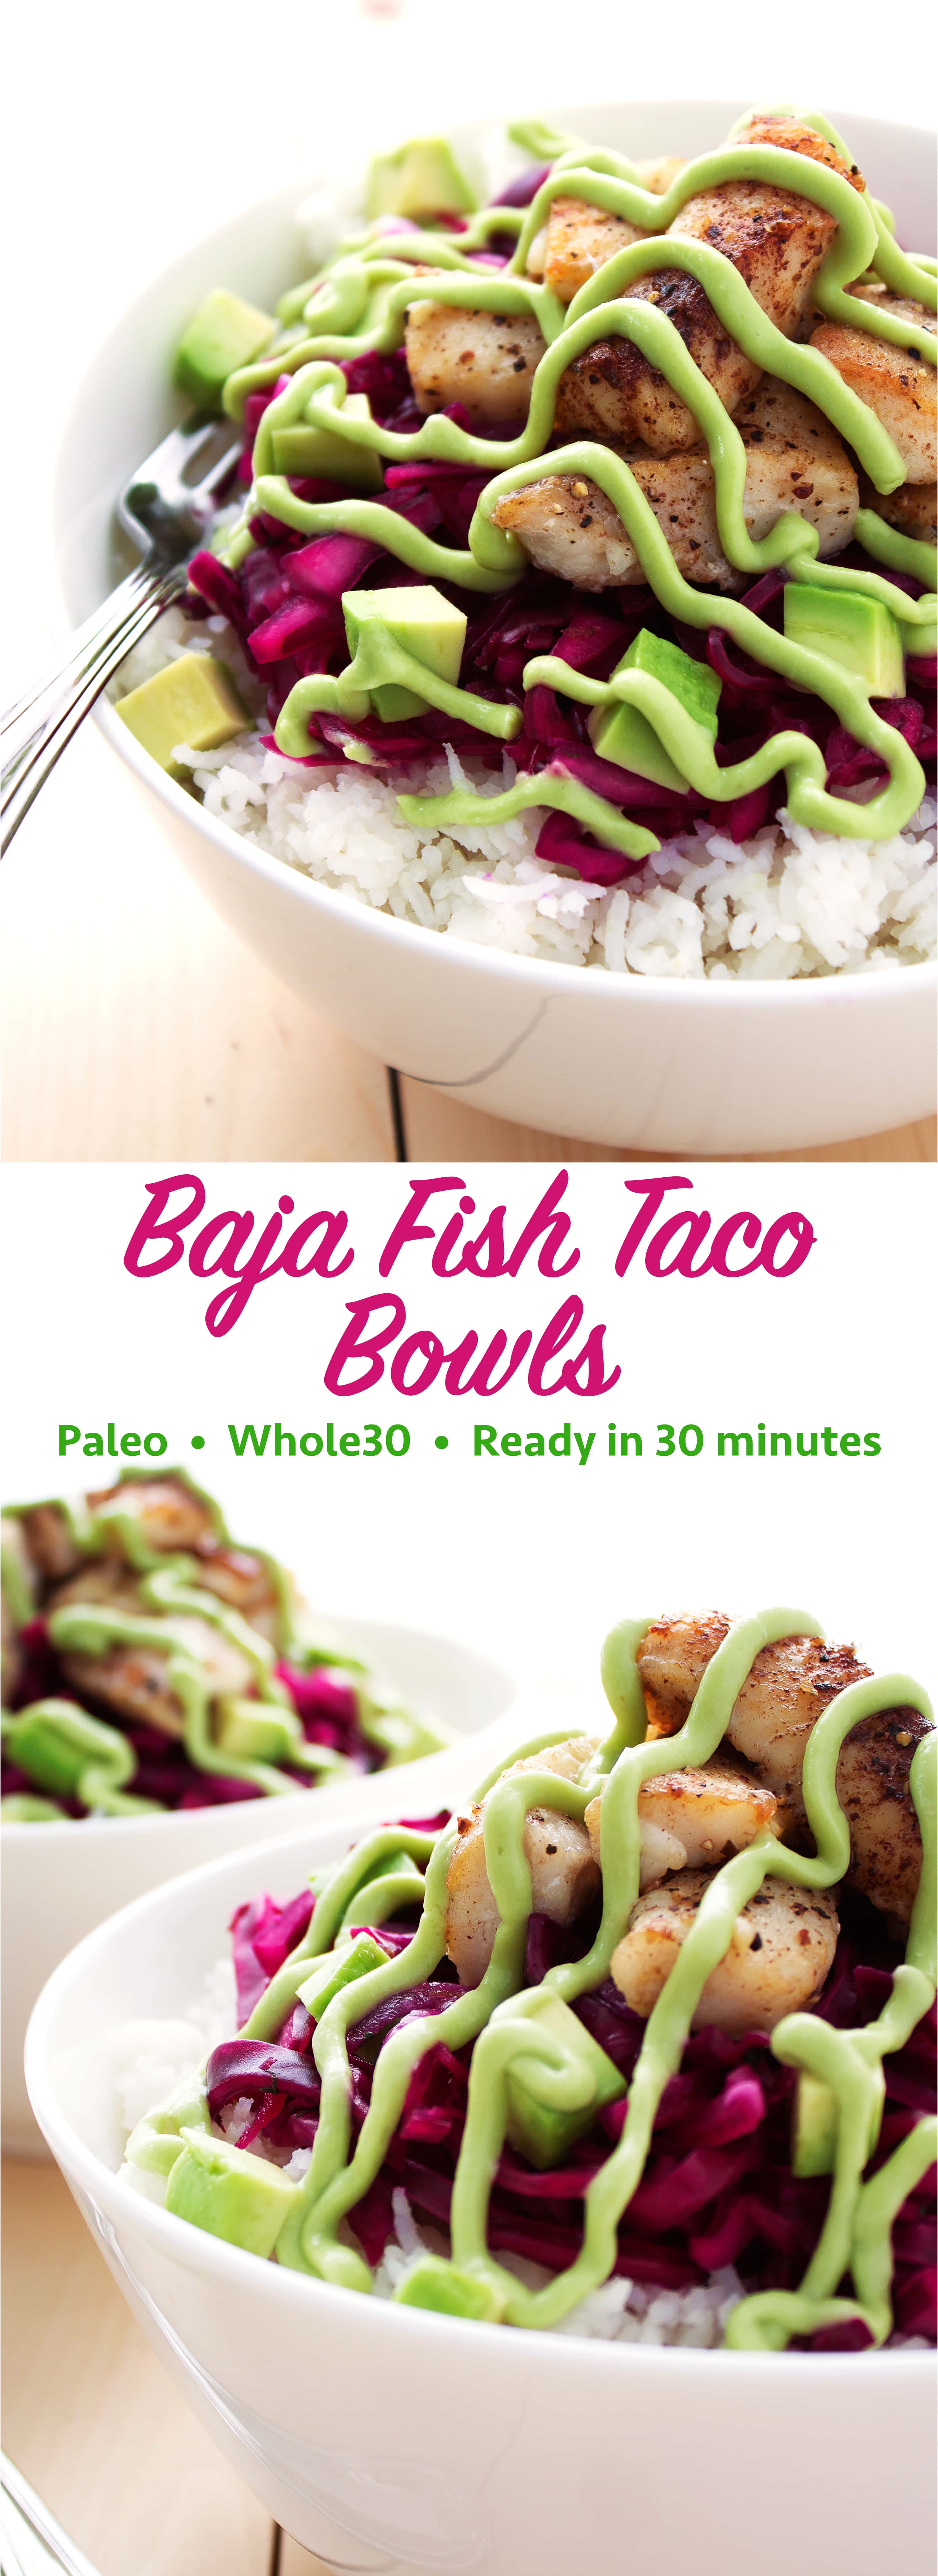 Paleo Baja Fish Taco Bowls | Kit's Coastal | #kitscoastal #coastalpaleo #paleo #glutenfree #dairyfree #whole30